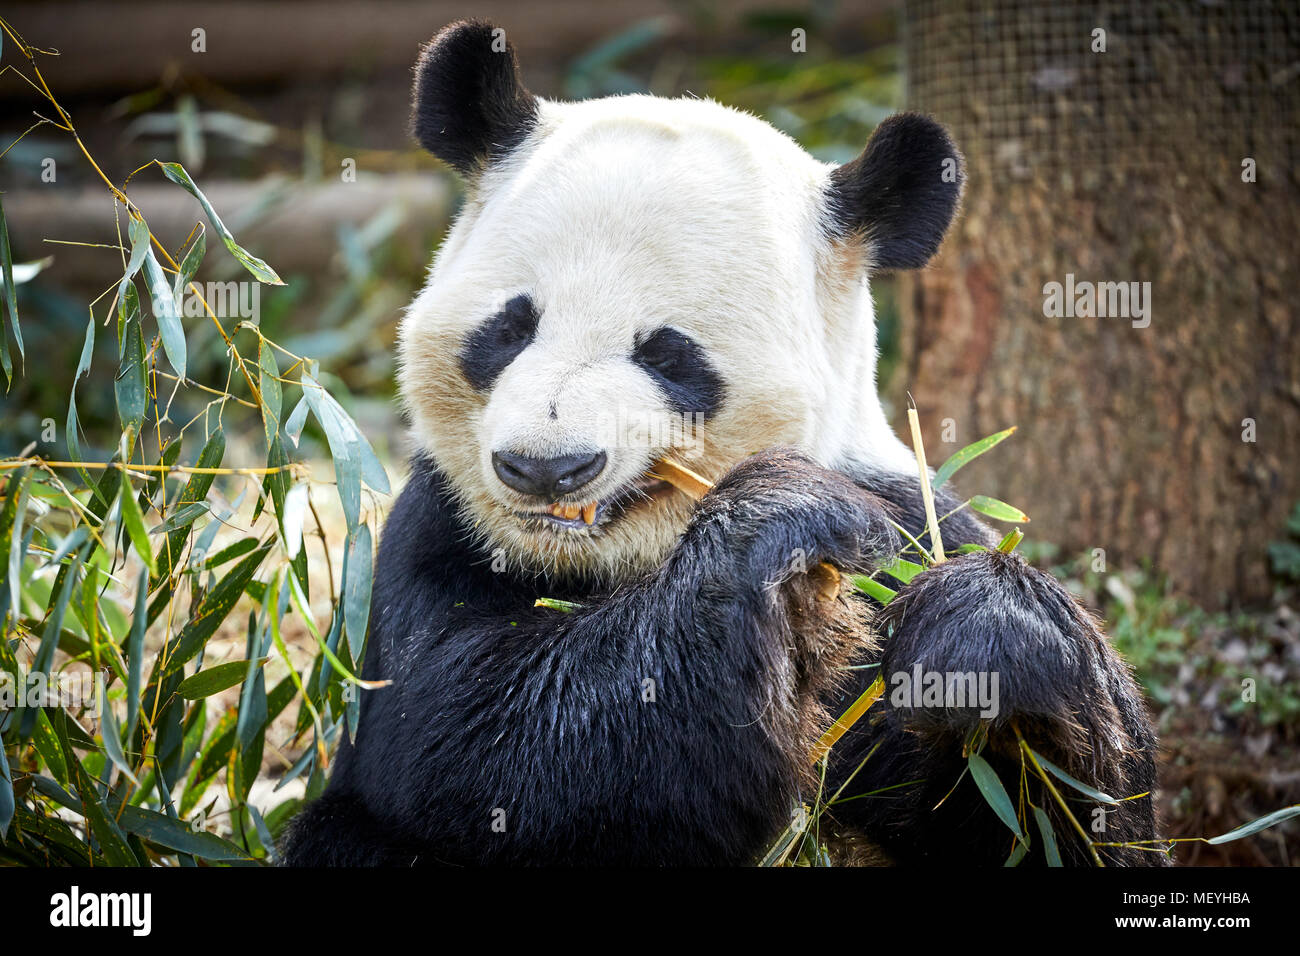 Atlanta capital of the U.S. state of Georgia,  Atlanta Zoo zoological park giant panda bear native to south central China Stock Photo